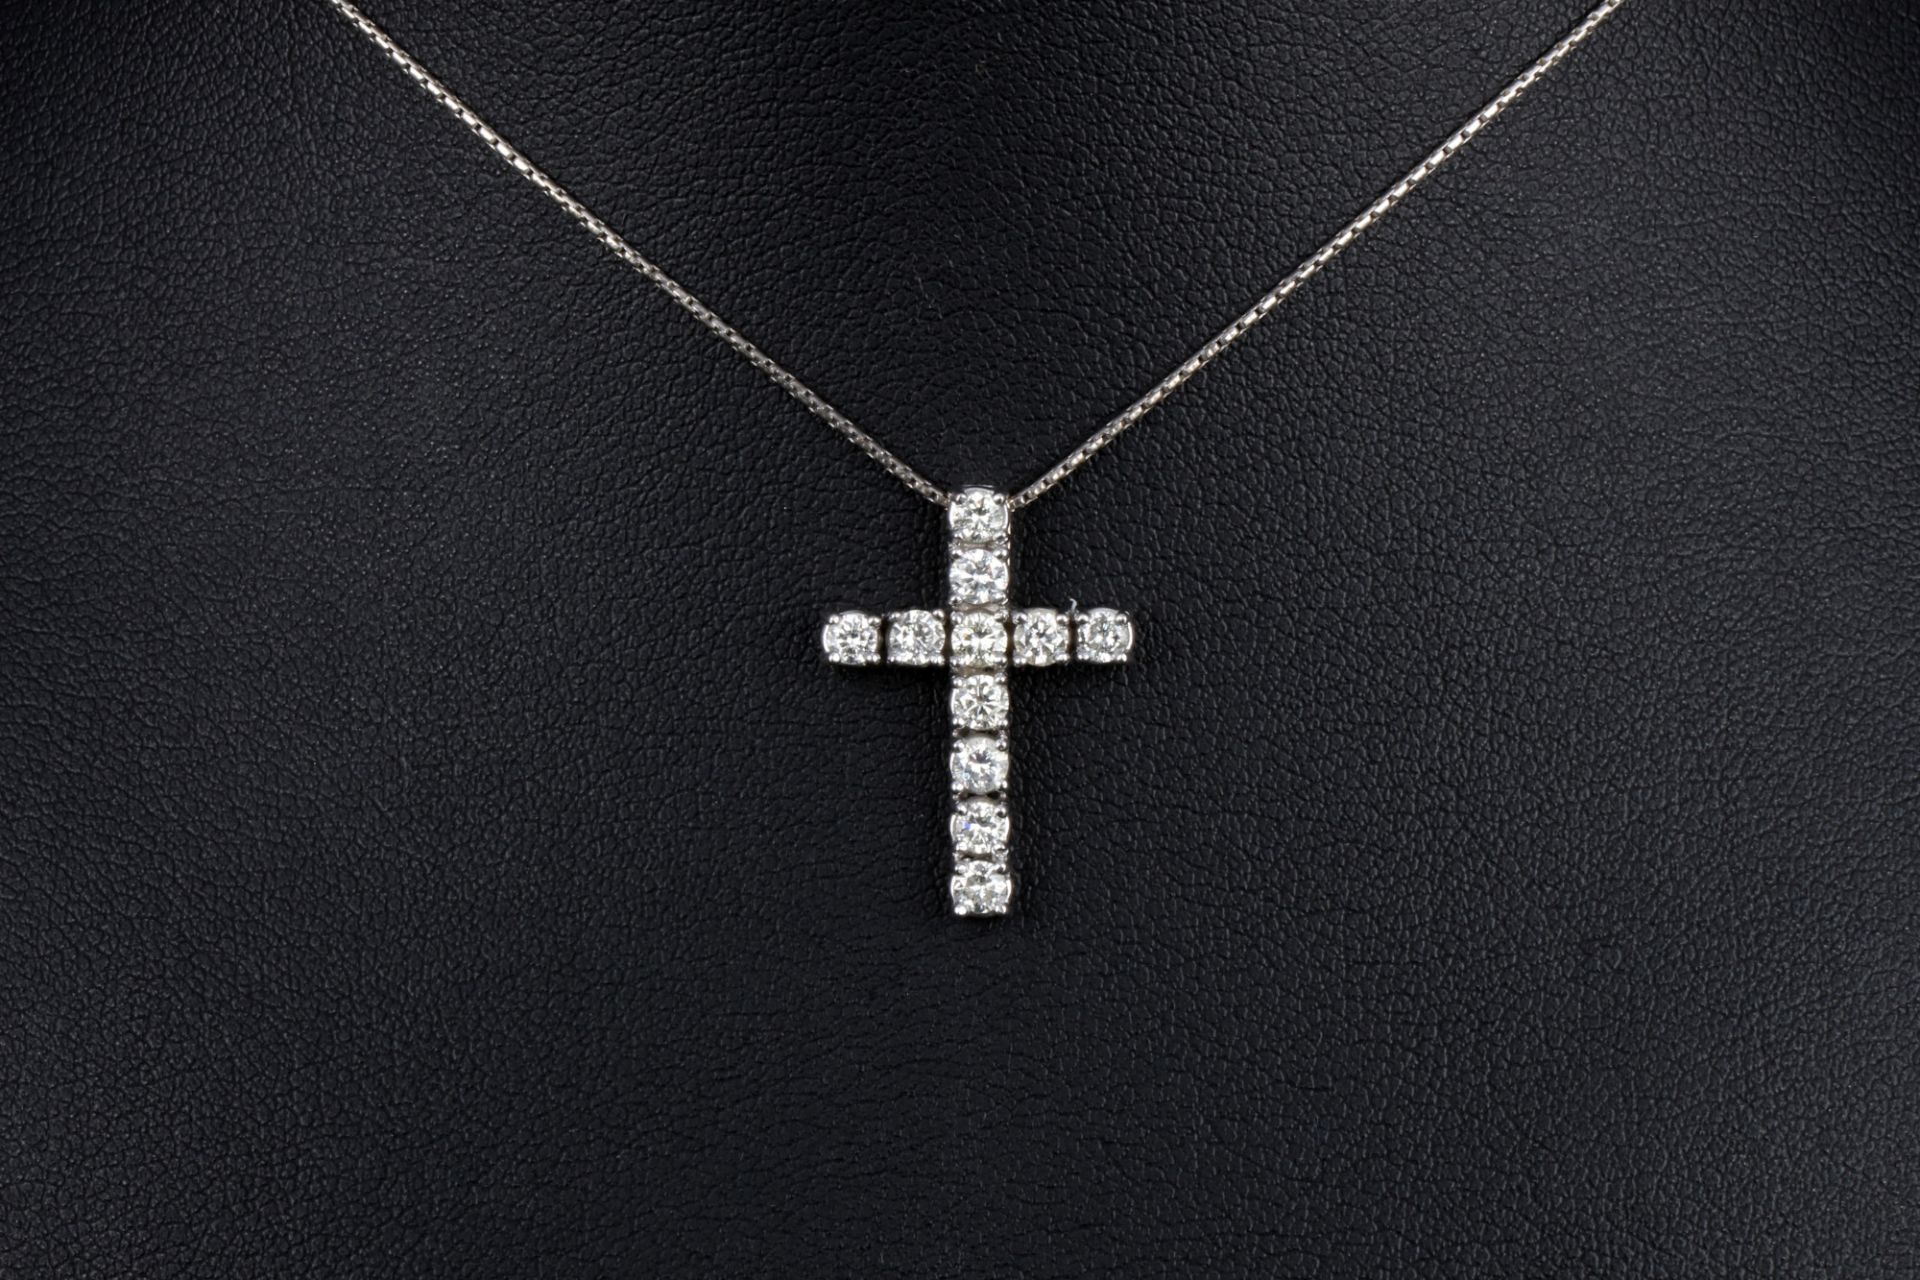 750 gold diamond cross on necklace 0.55ct, 18K Gold Brillanten Kreuz an Halskette, - Image 2 of 5